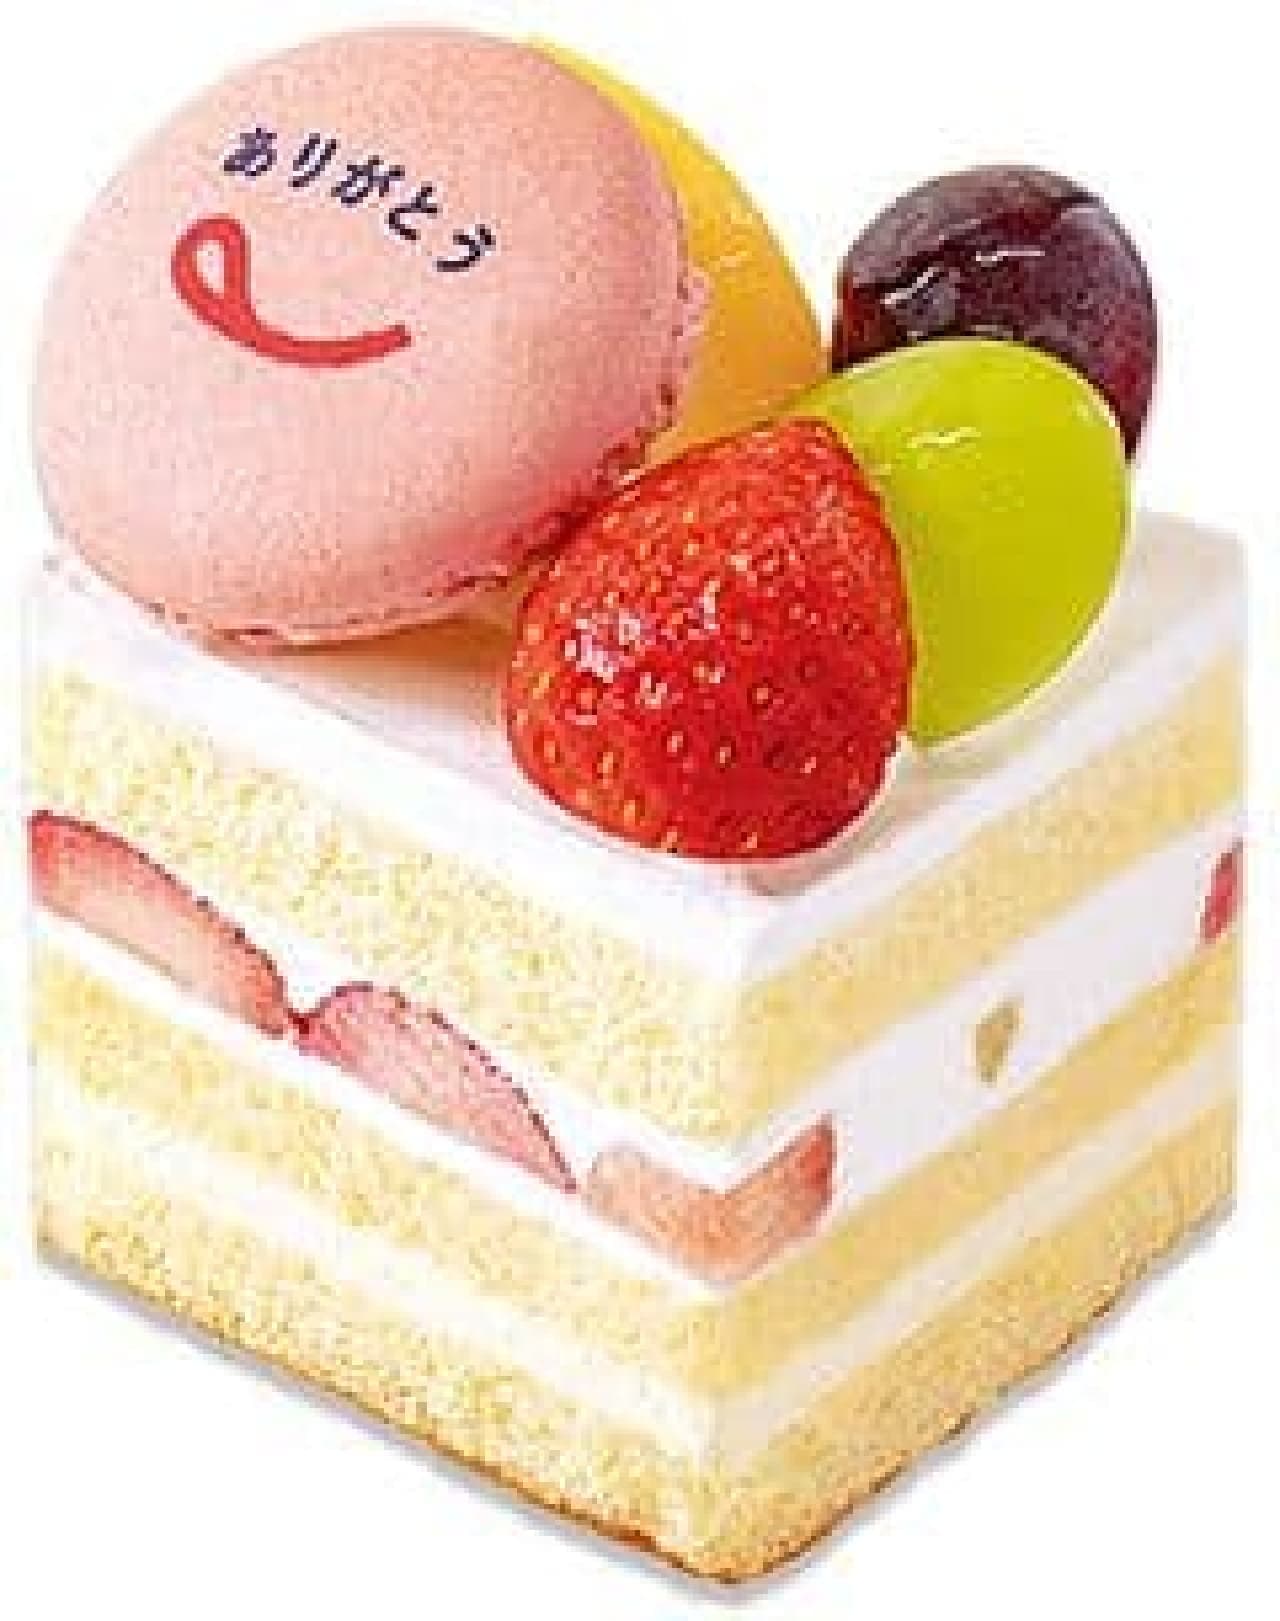 Fujiya "Fruit Shortcake